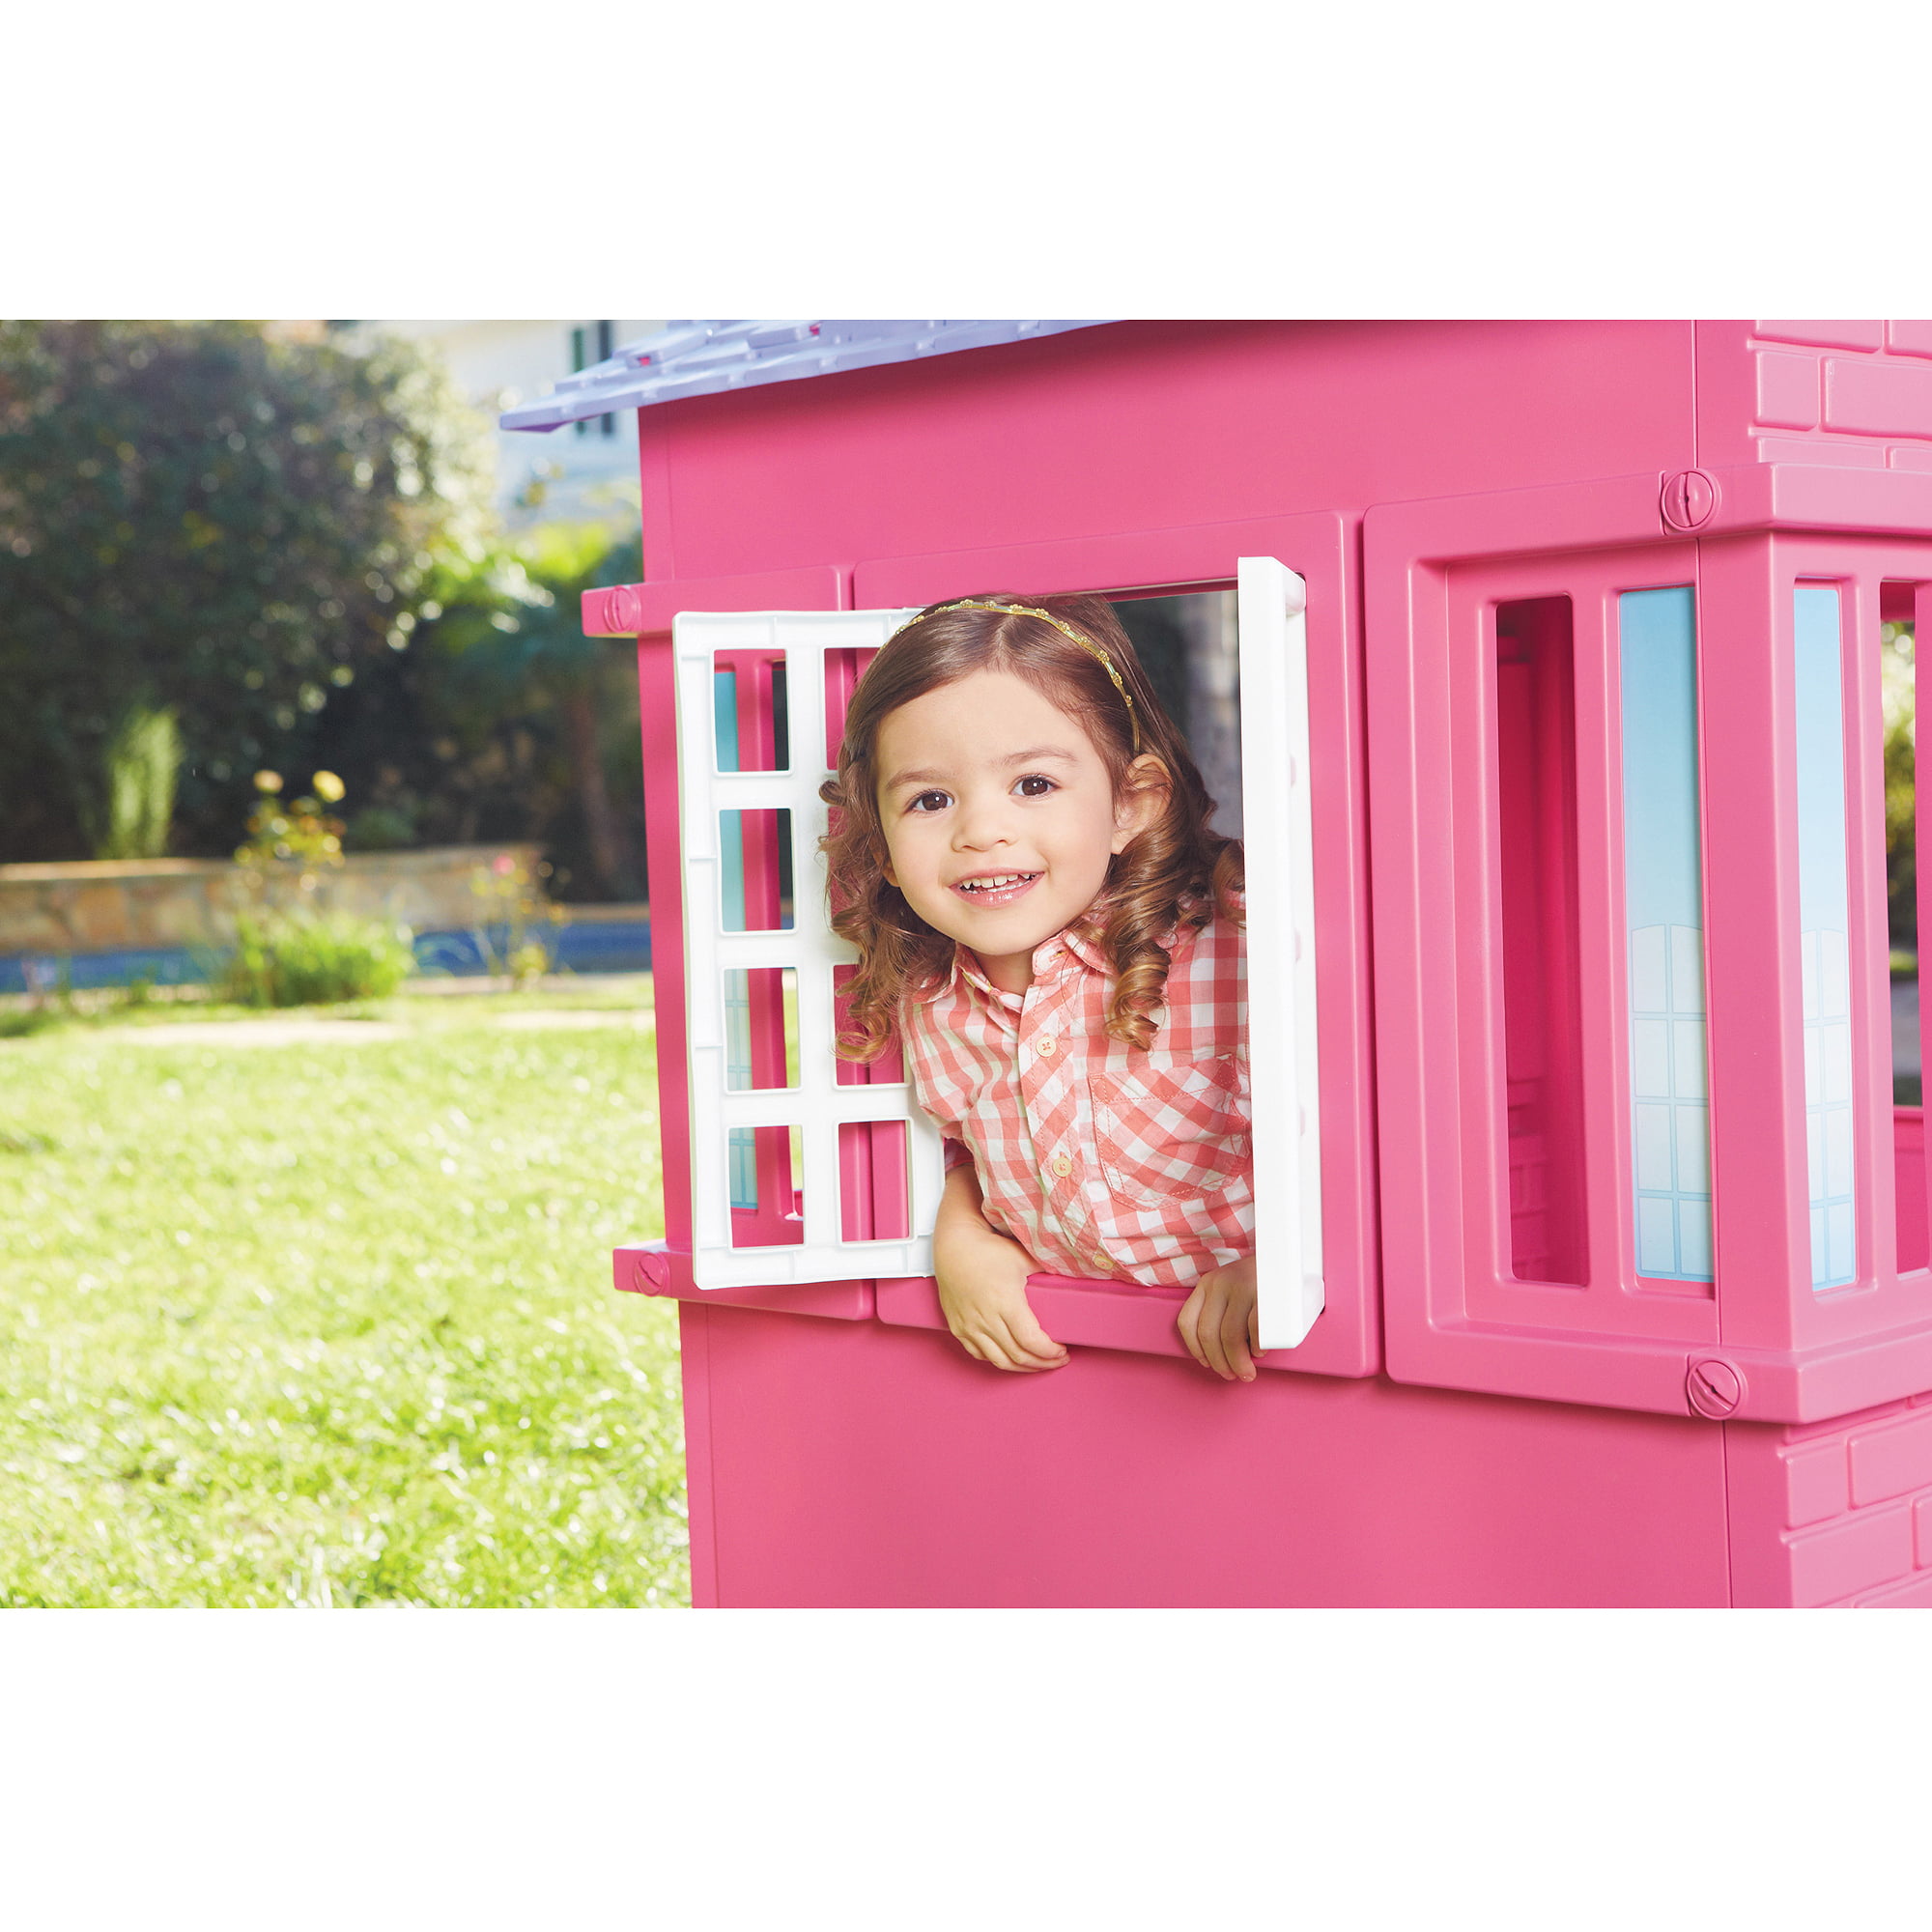 Cottage Playhouse Pink Kids Outdoor Playhouses Indoor Playset Backyard Playground Girls Children Fun Toy Garden House NEW 